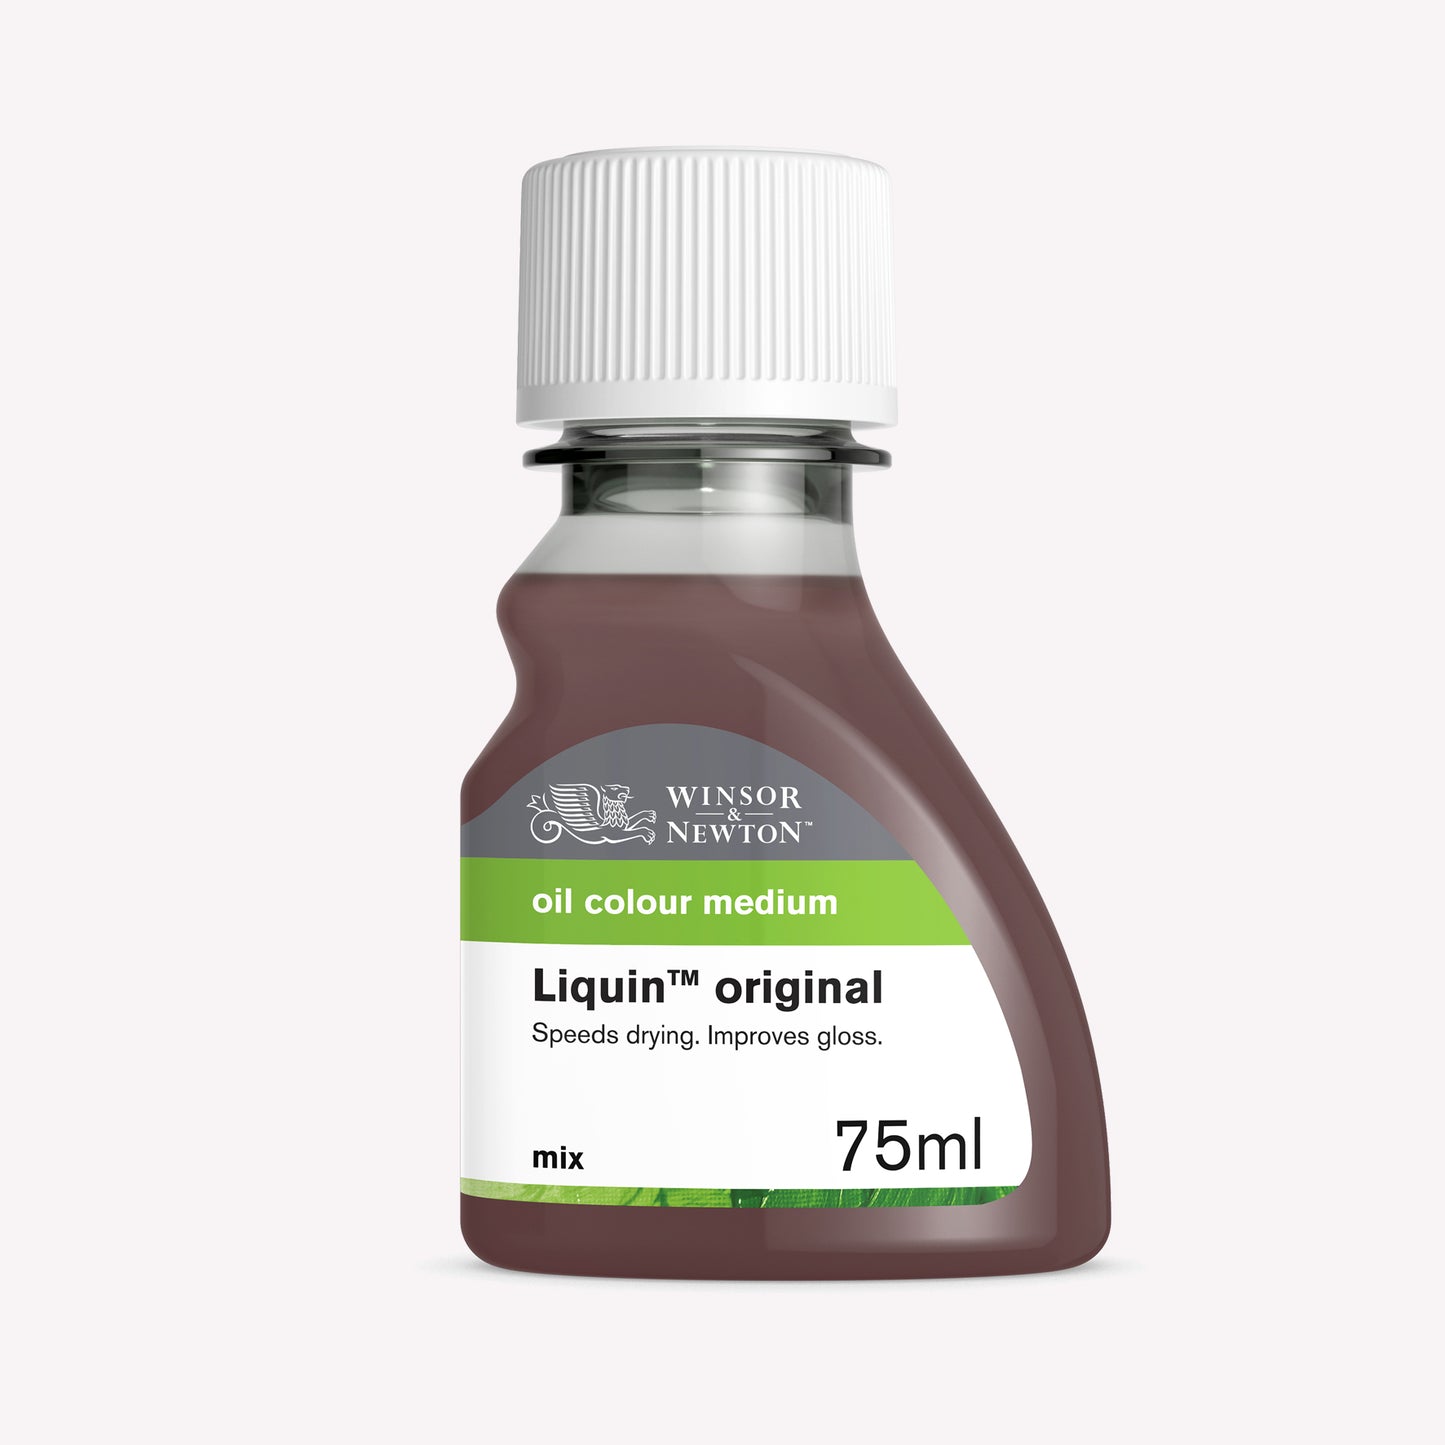 Winsor & Newton's Liquin Original is a brown liquid oil colour medium packaged in a plastic 75ml bottle.